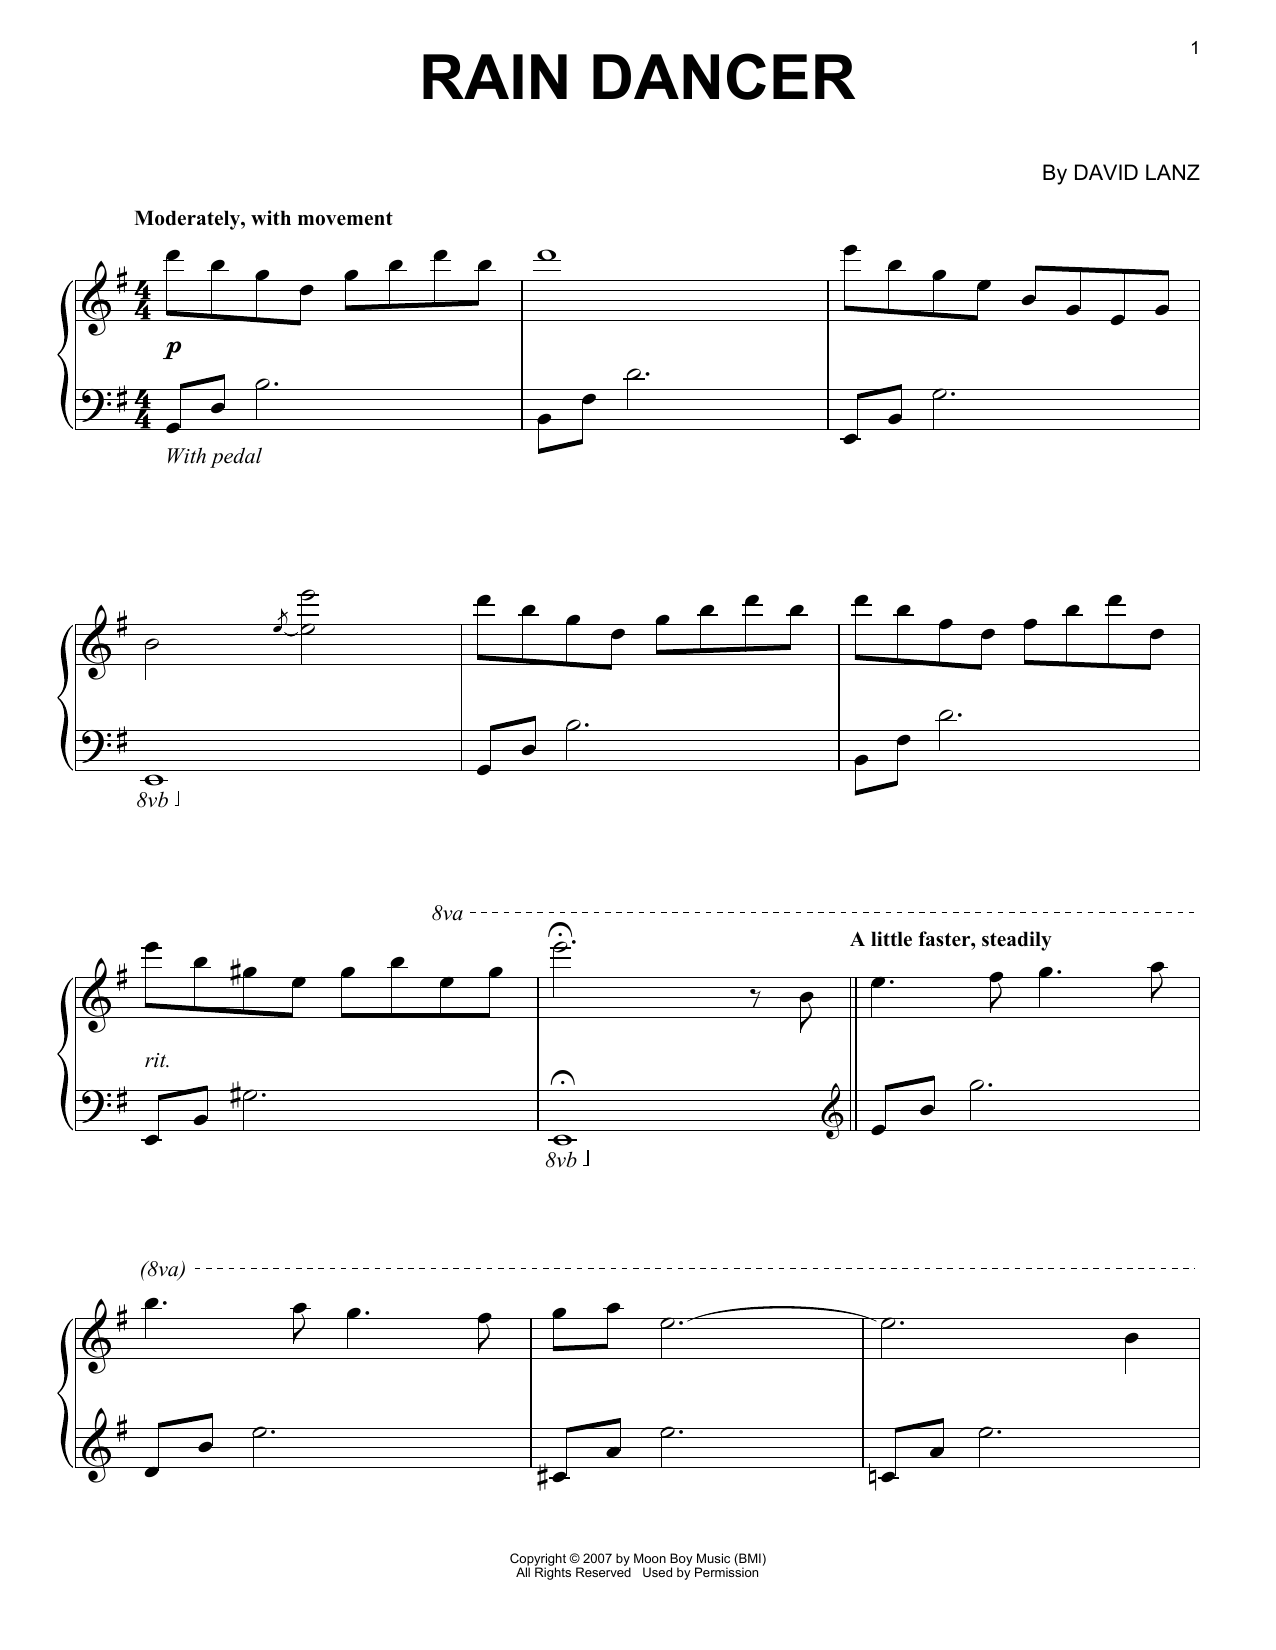 David Lanz & Gary Stroutsos Rain Dancer Sheet Music Notes & Chords for Piano Solo - Download or Print PDF